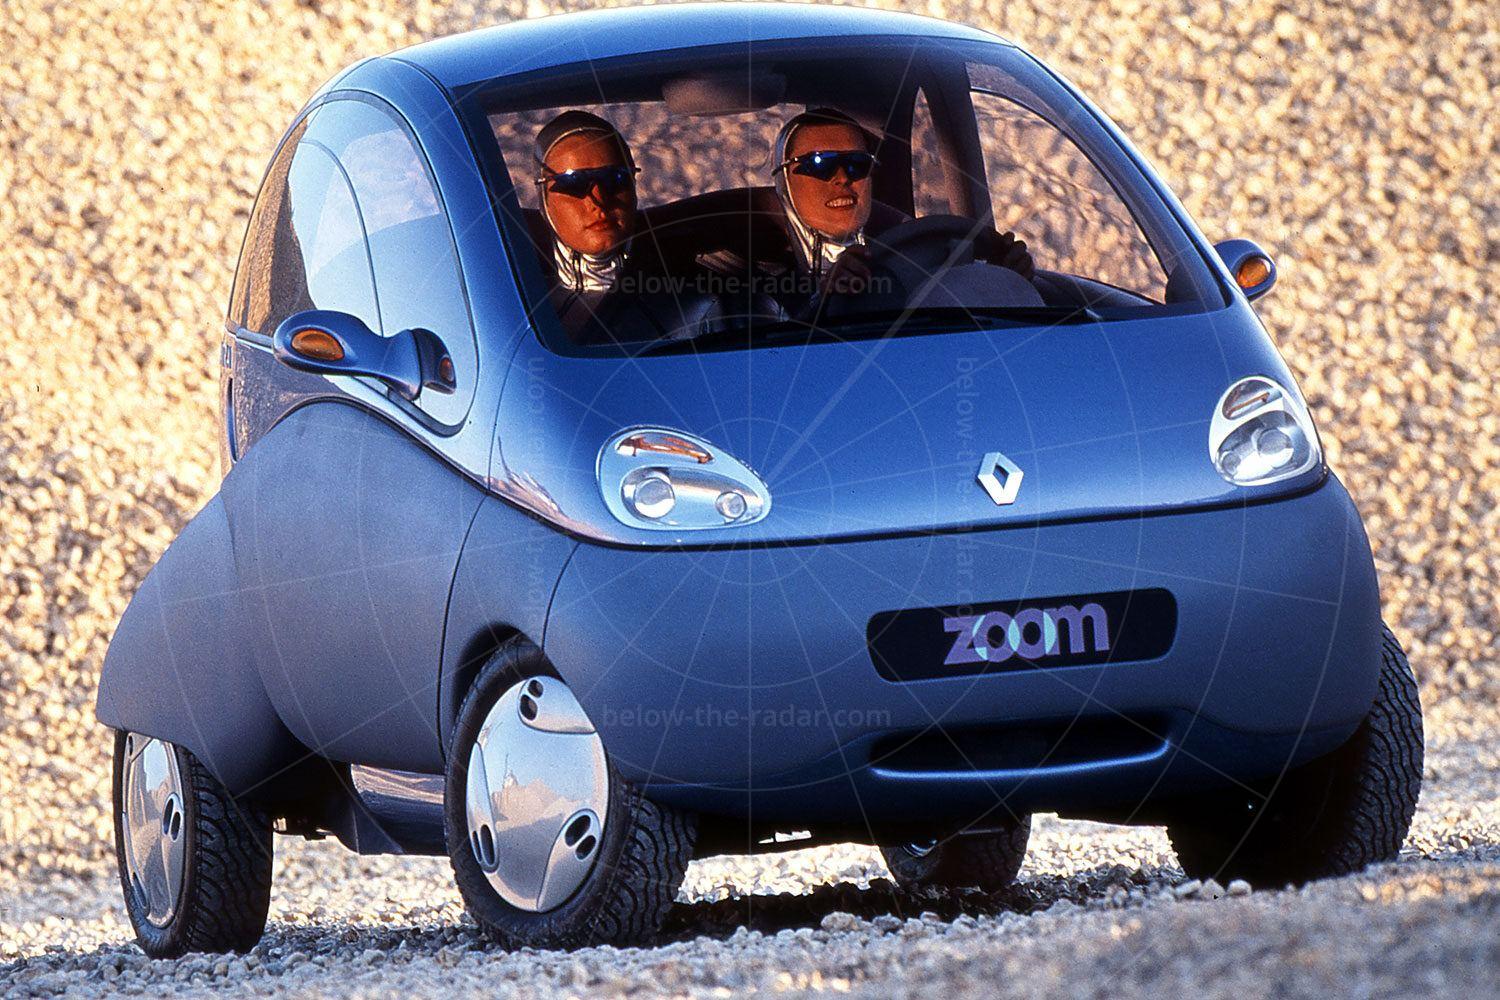 Renault Zoom Pic: Renault | Renault Zoom